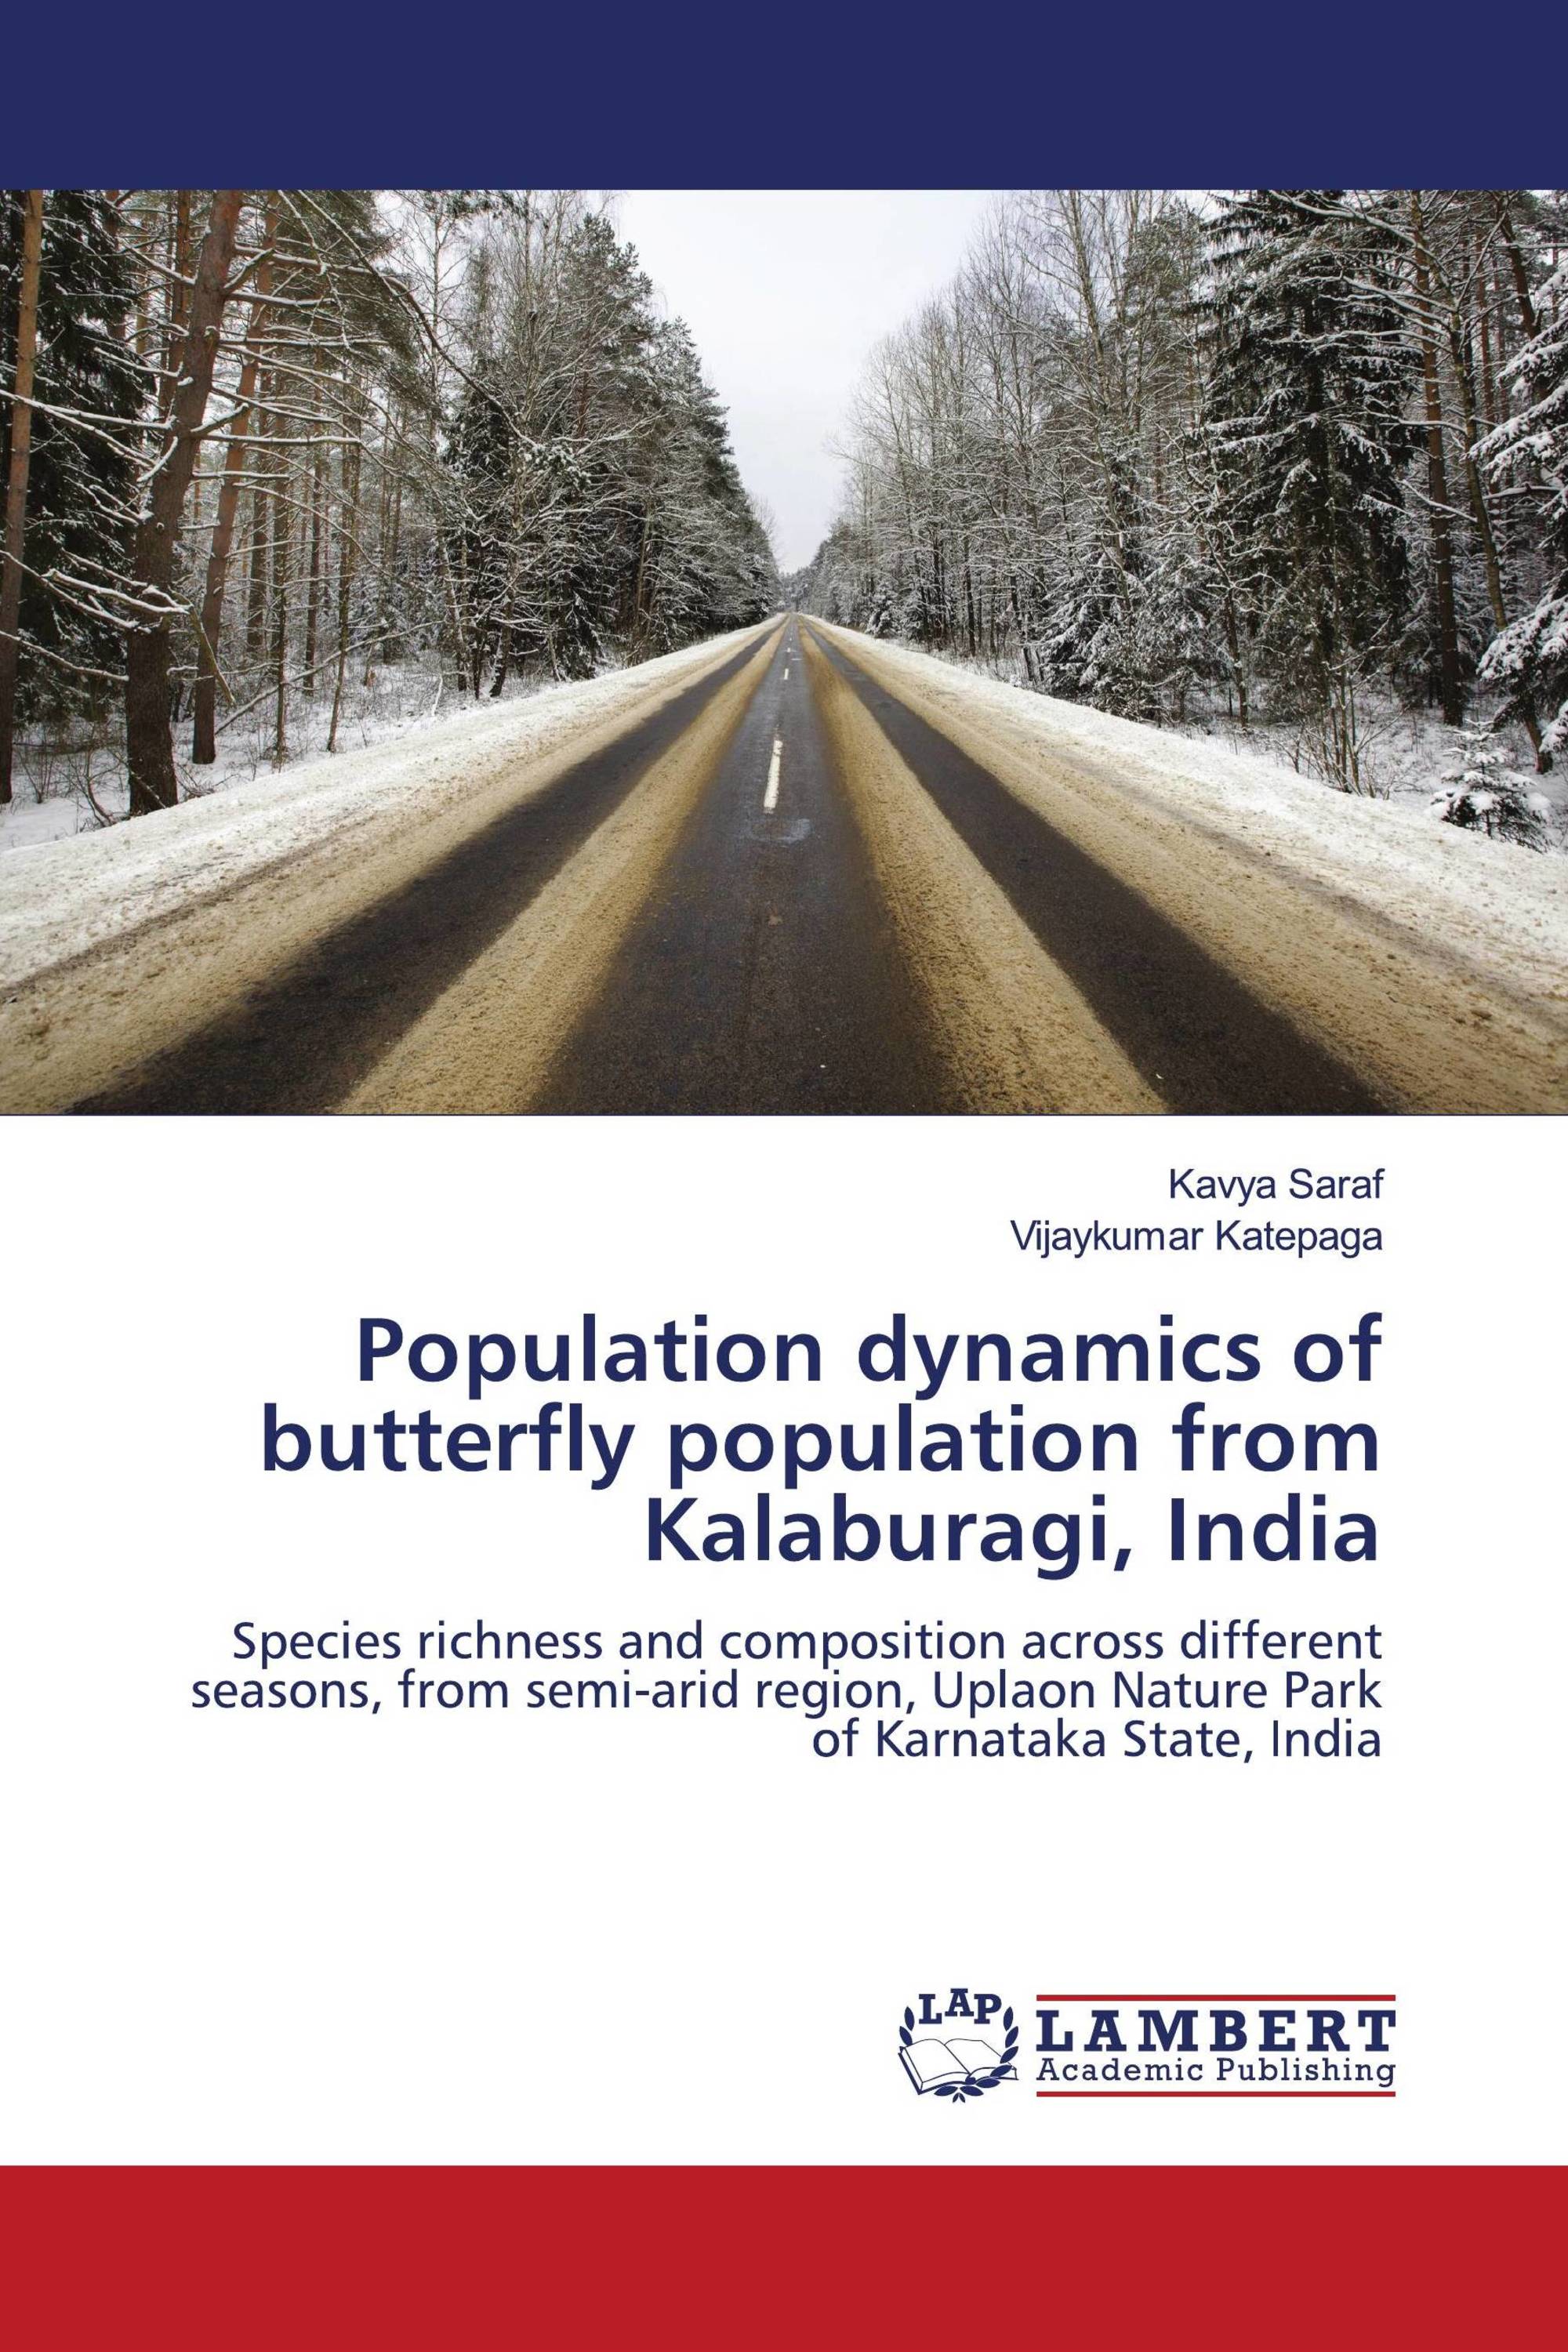 Population dynamics of butterfly population from Kalaburagi, India